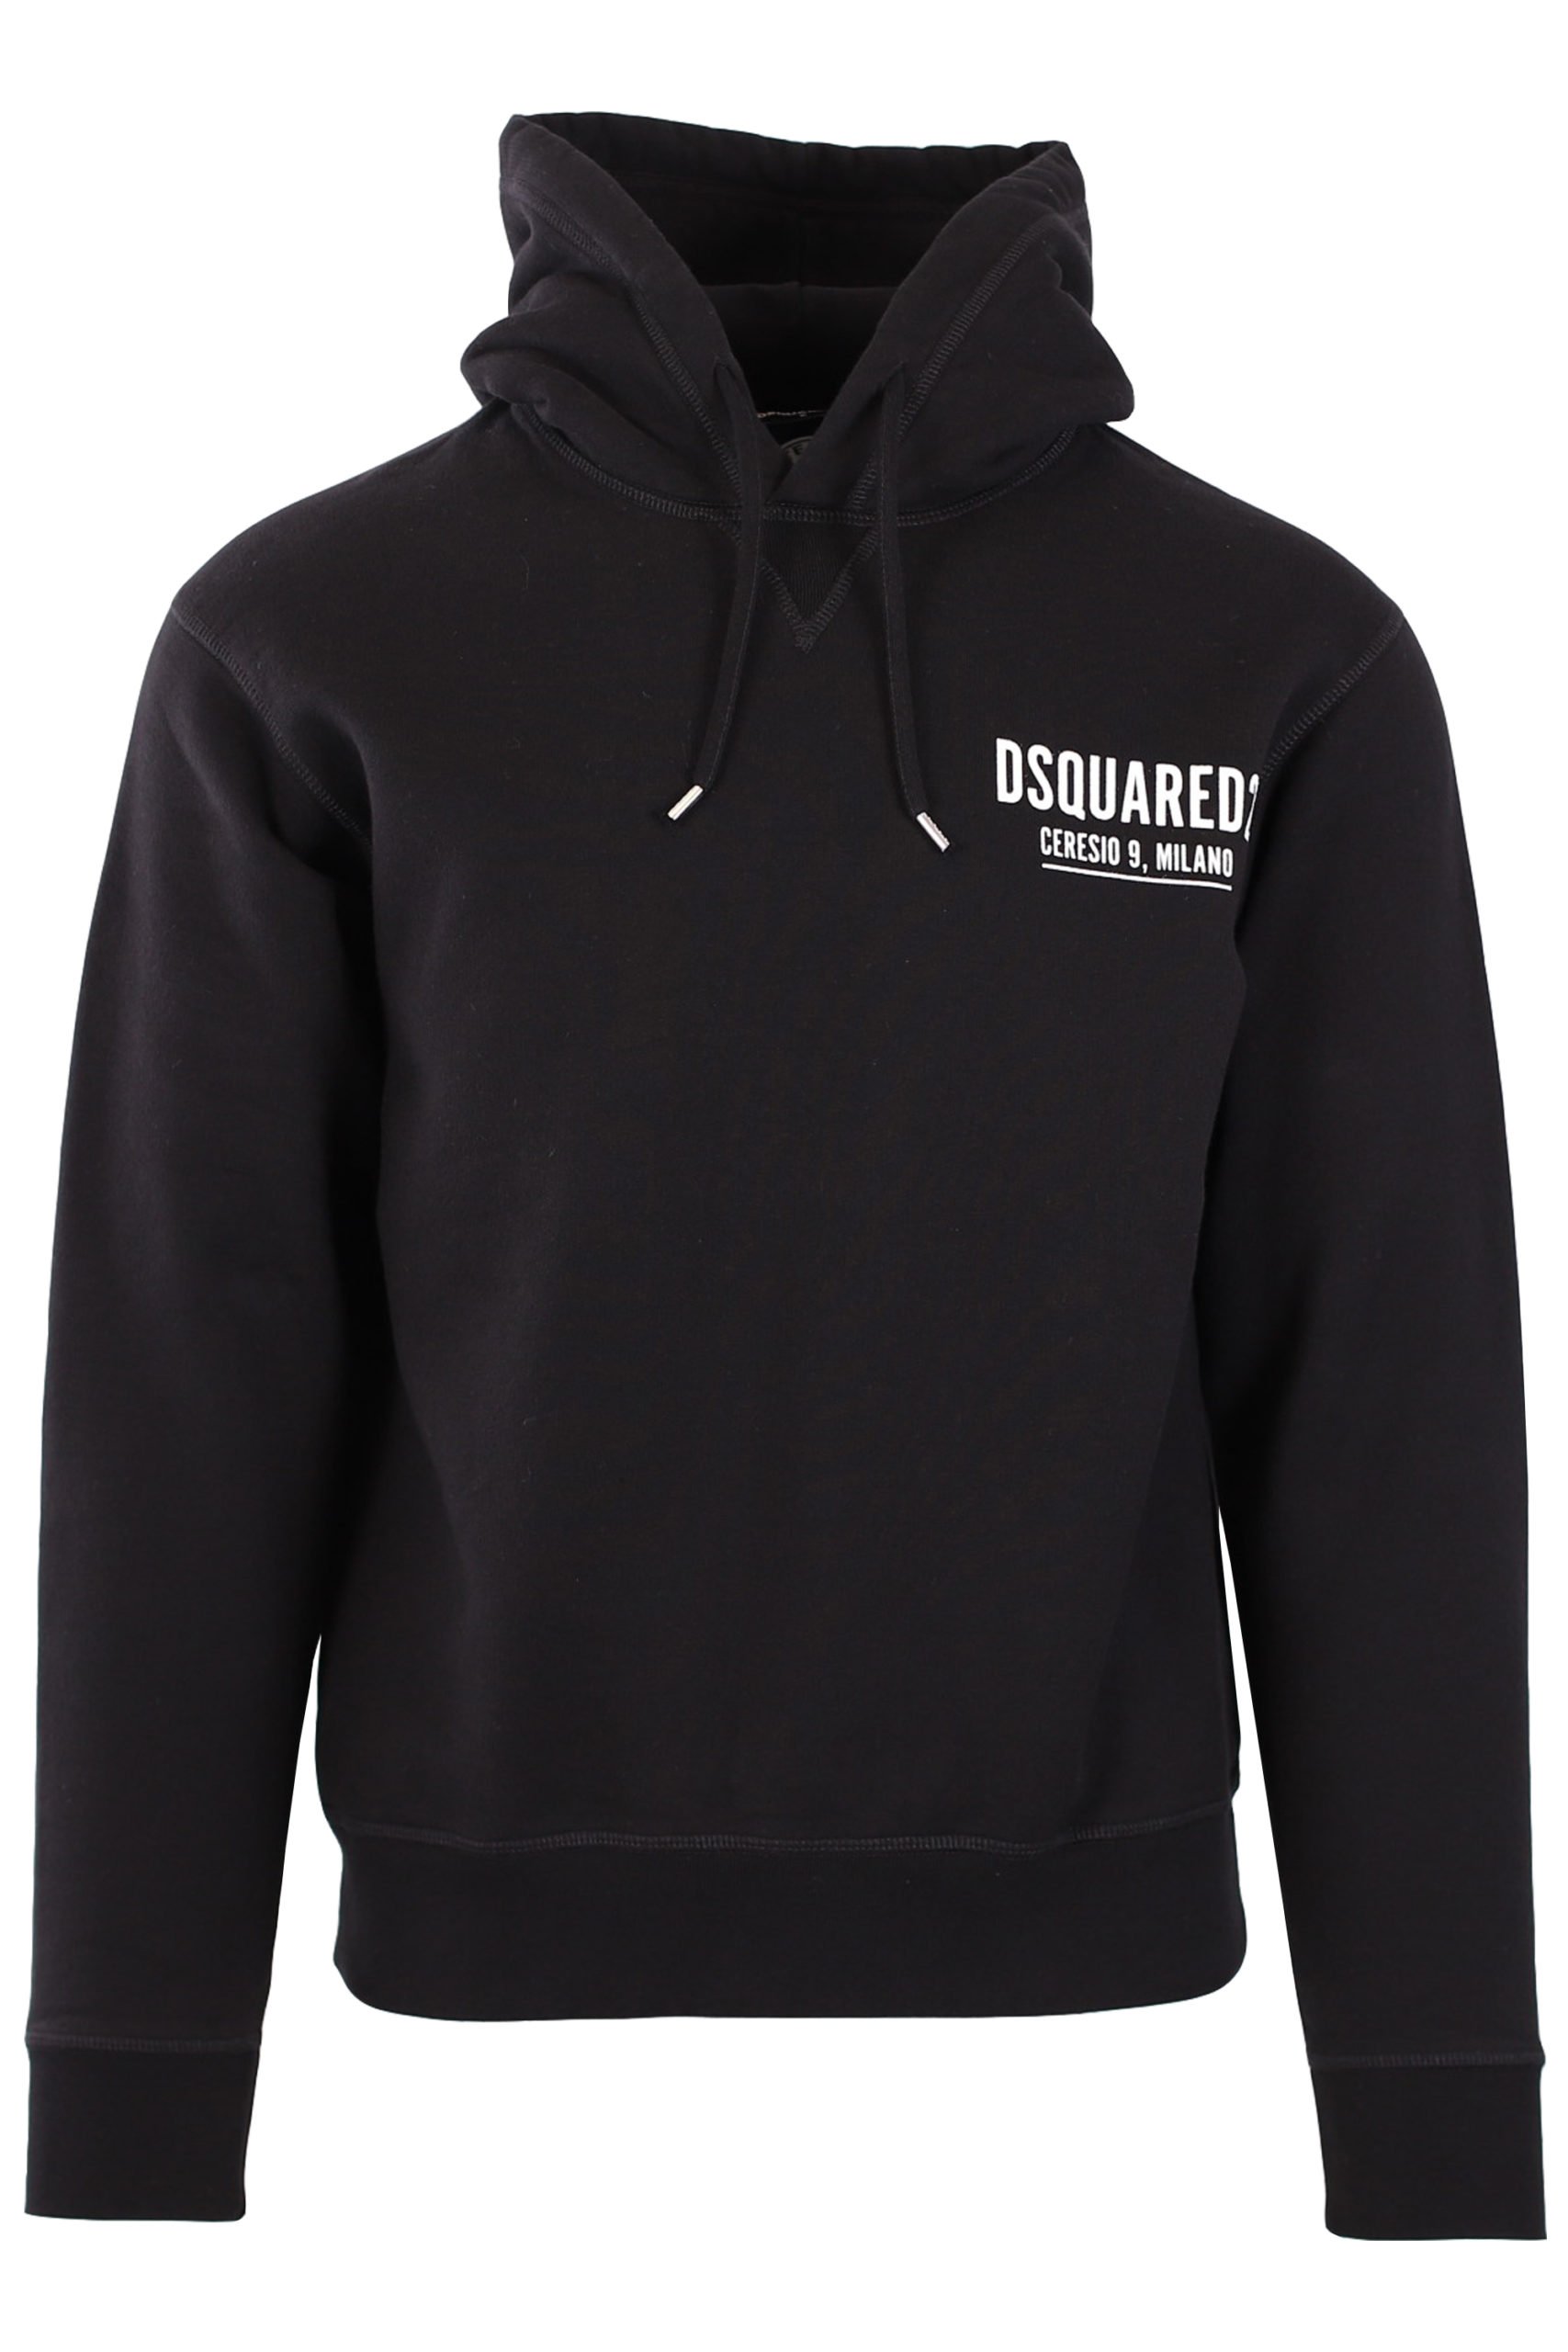 Dsquared2 - Sudadera negra con capucha y logo 